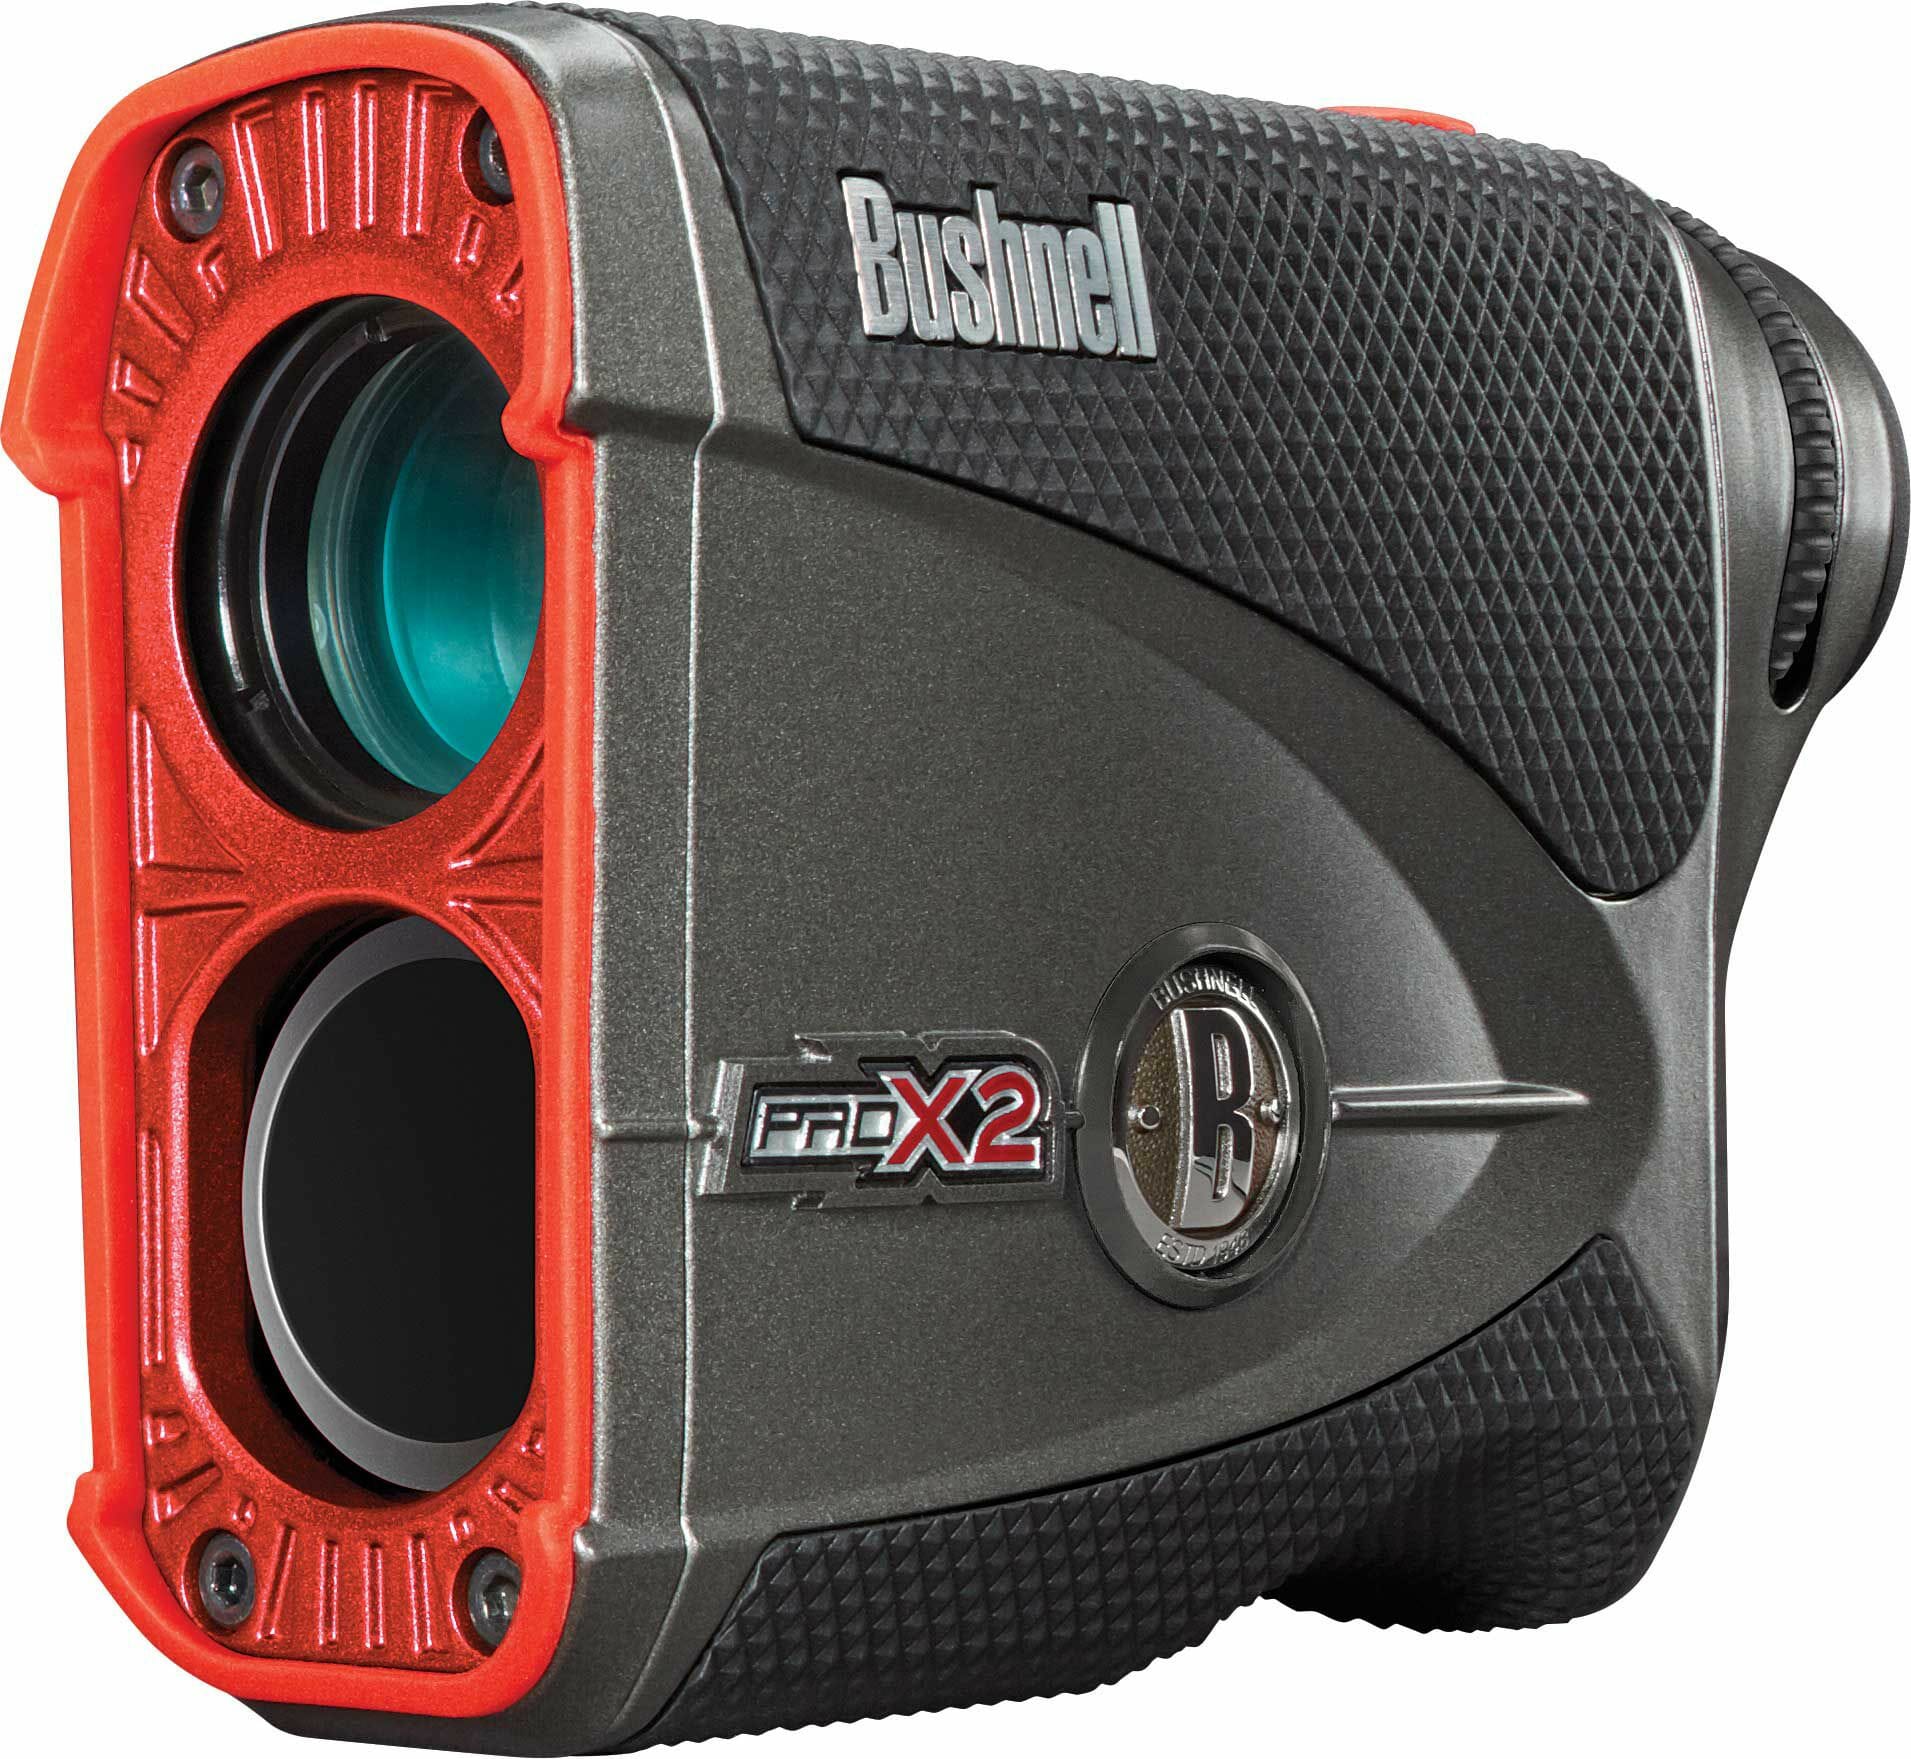 Bushnell Pro X2 Rangefinder for Juniors